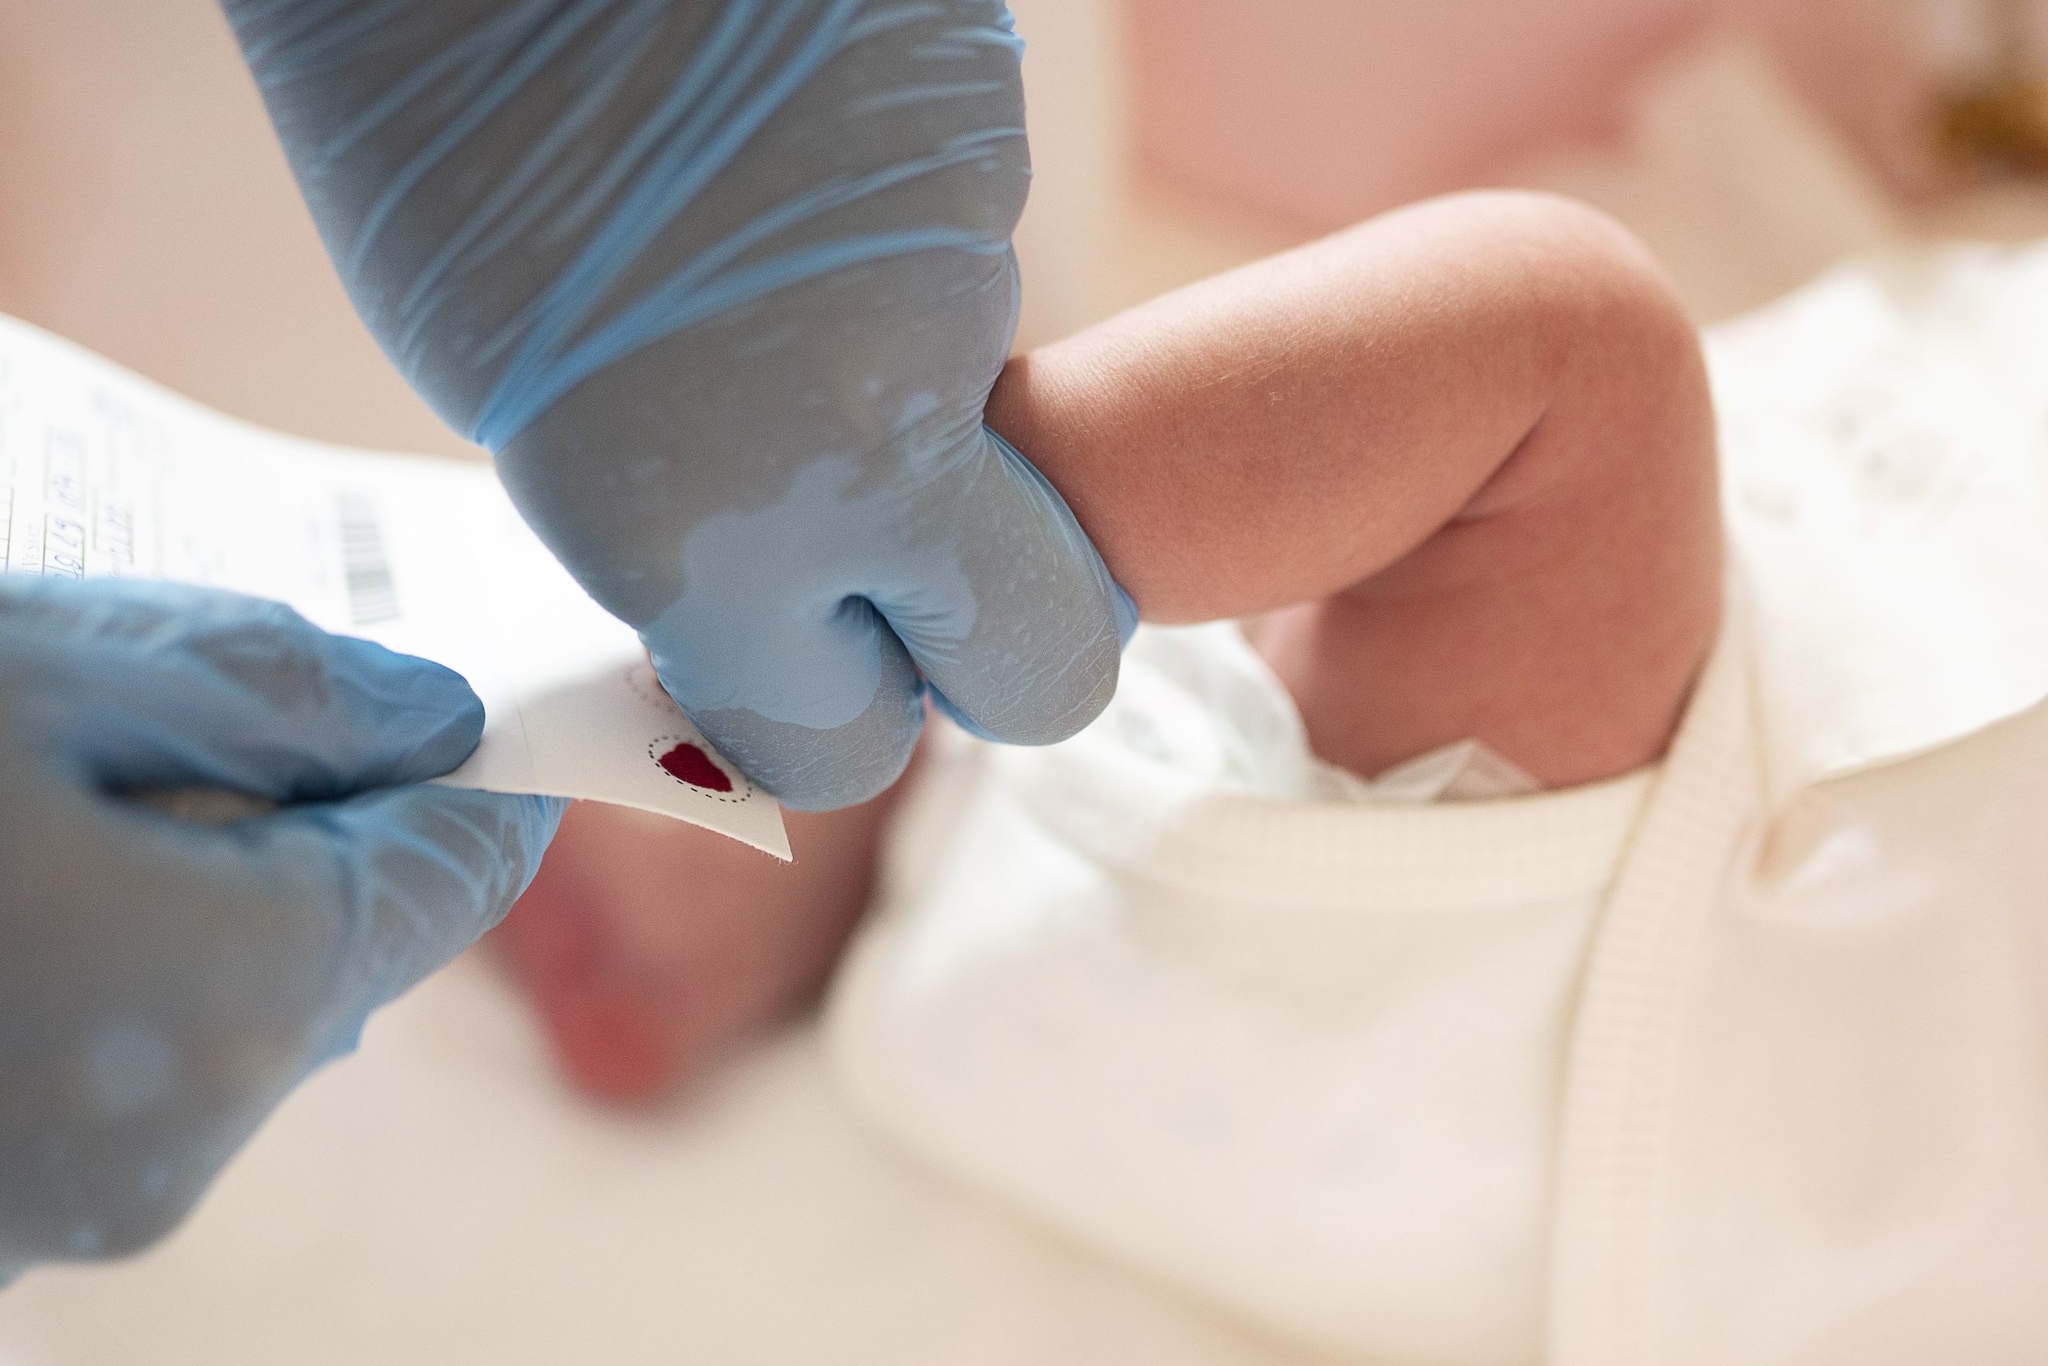 An image a blood spot testing on newborn